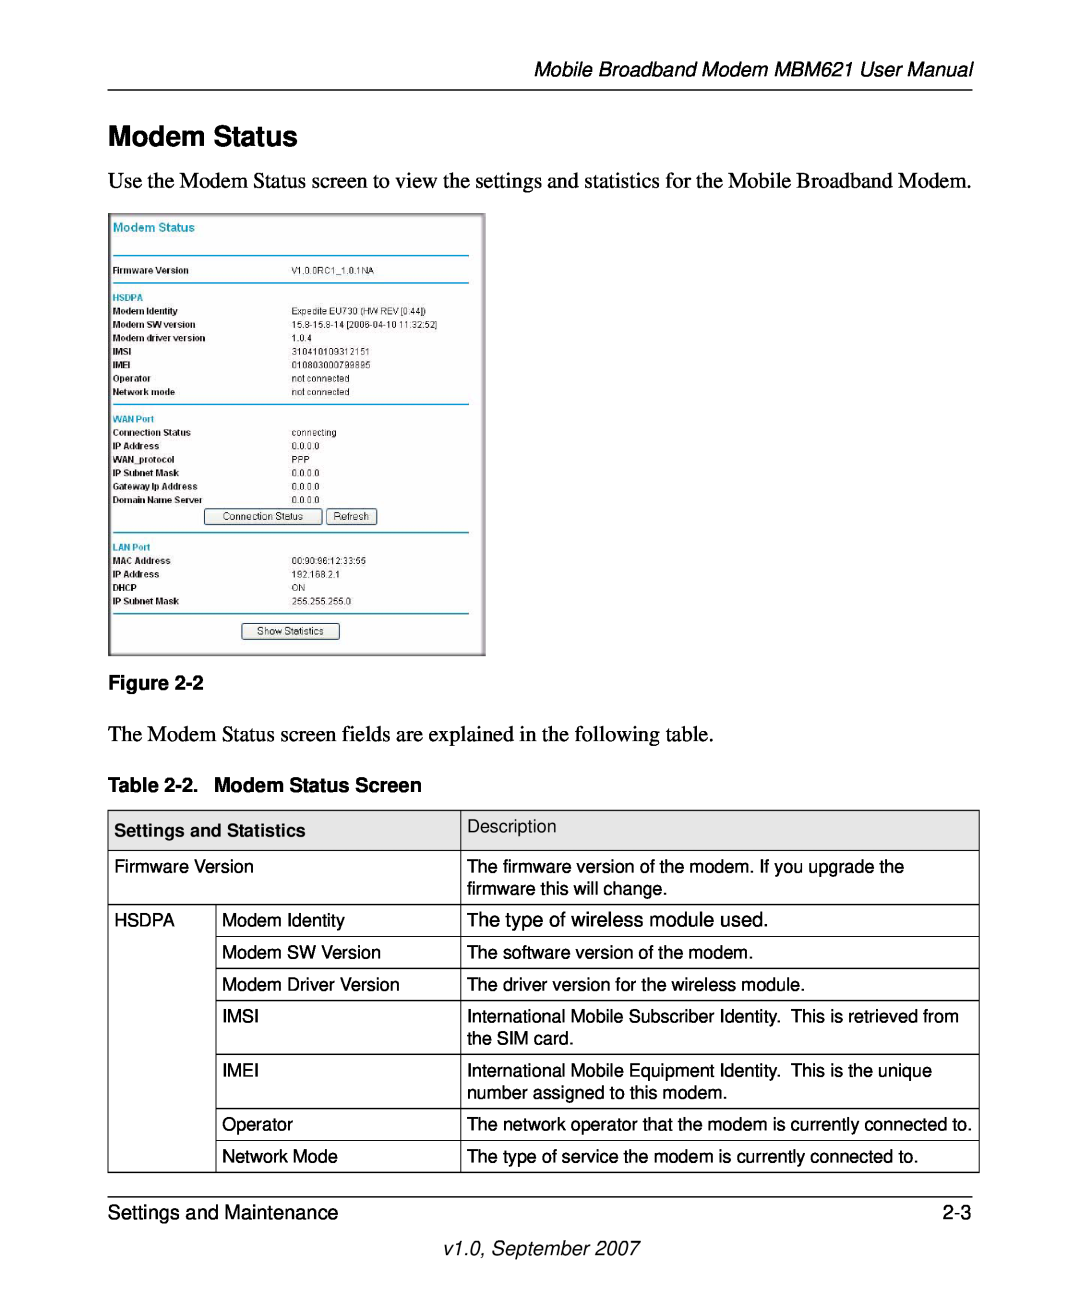 NETGEAR Mobile Broadband Modem MBM621 User Manual, 2. Modem Status Screen, The type of wireless module used 